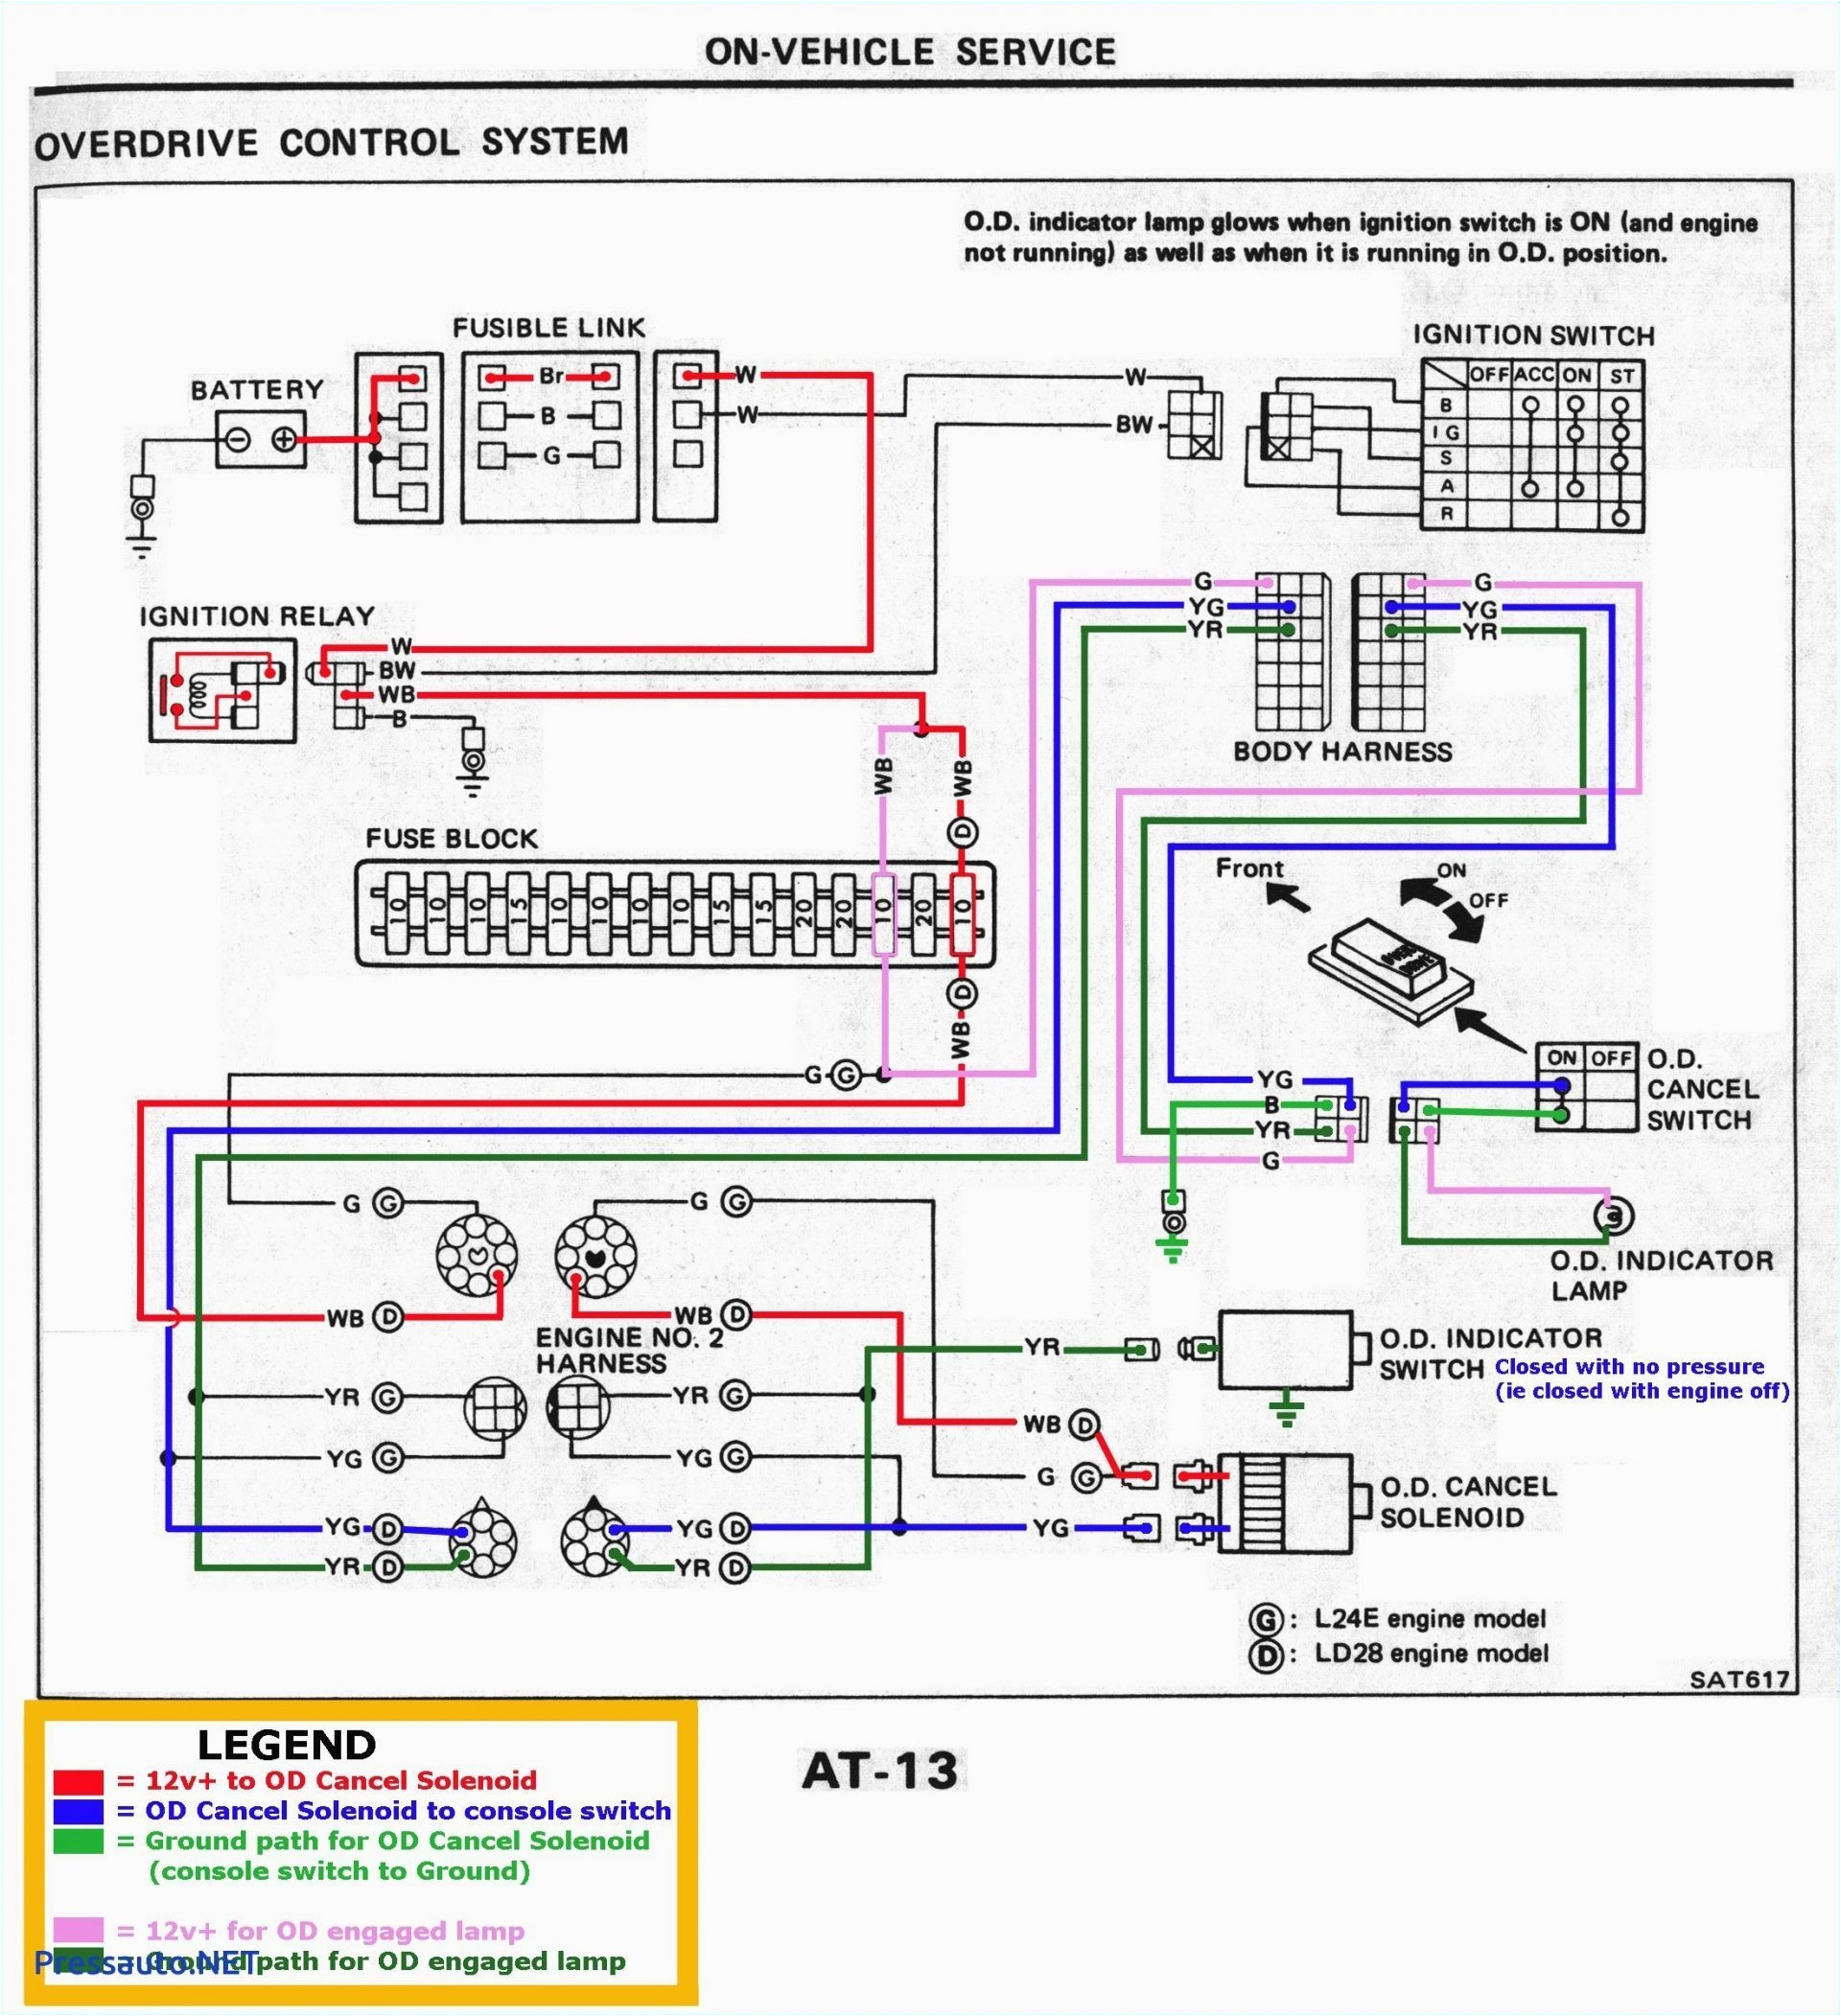 milnor wiring diagrams schema diagram database milnor wiring diagrams